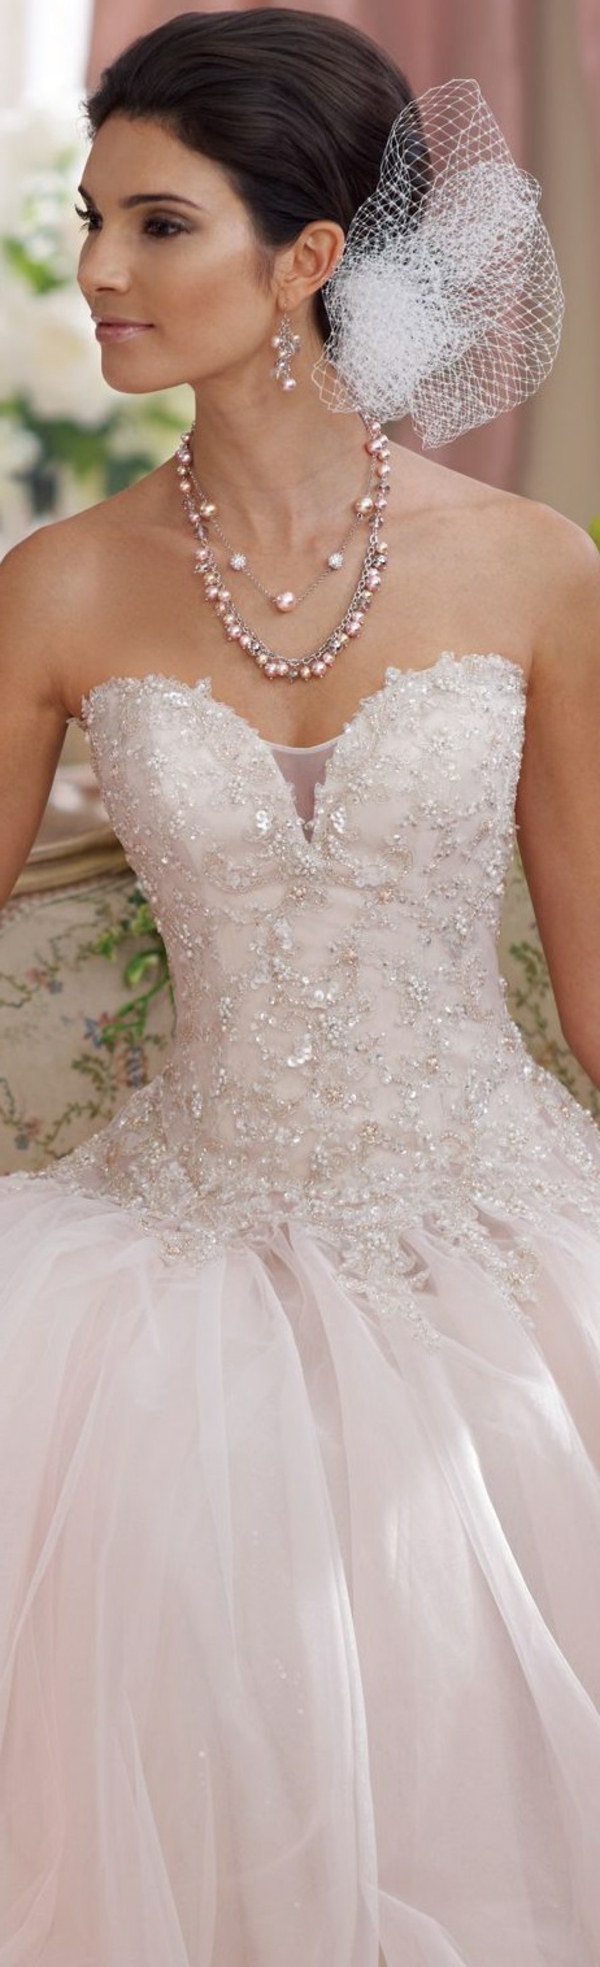 La robe de mariée rose - 60 idées originales!